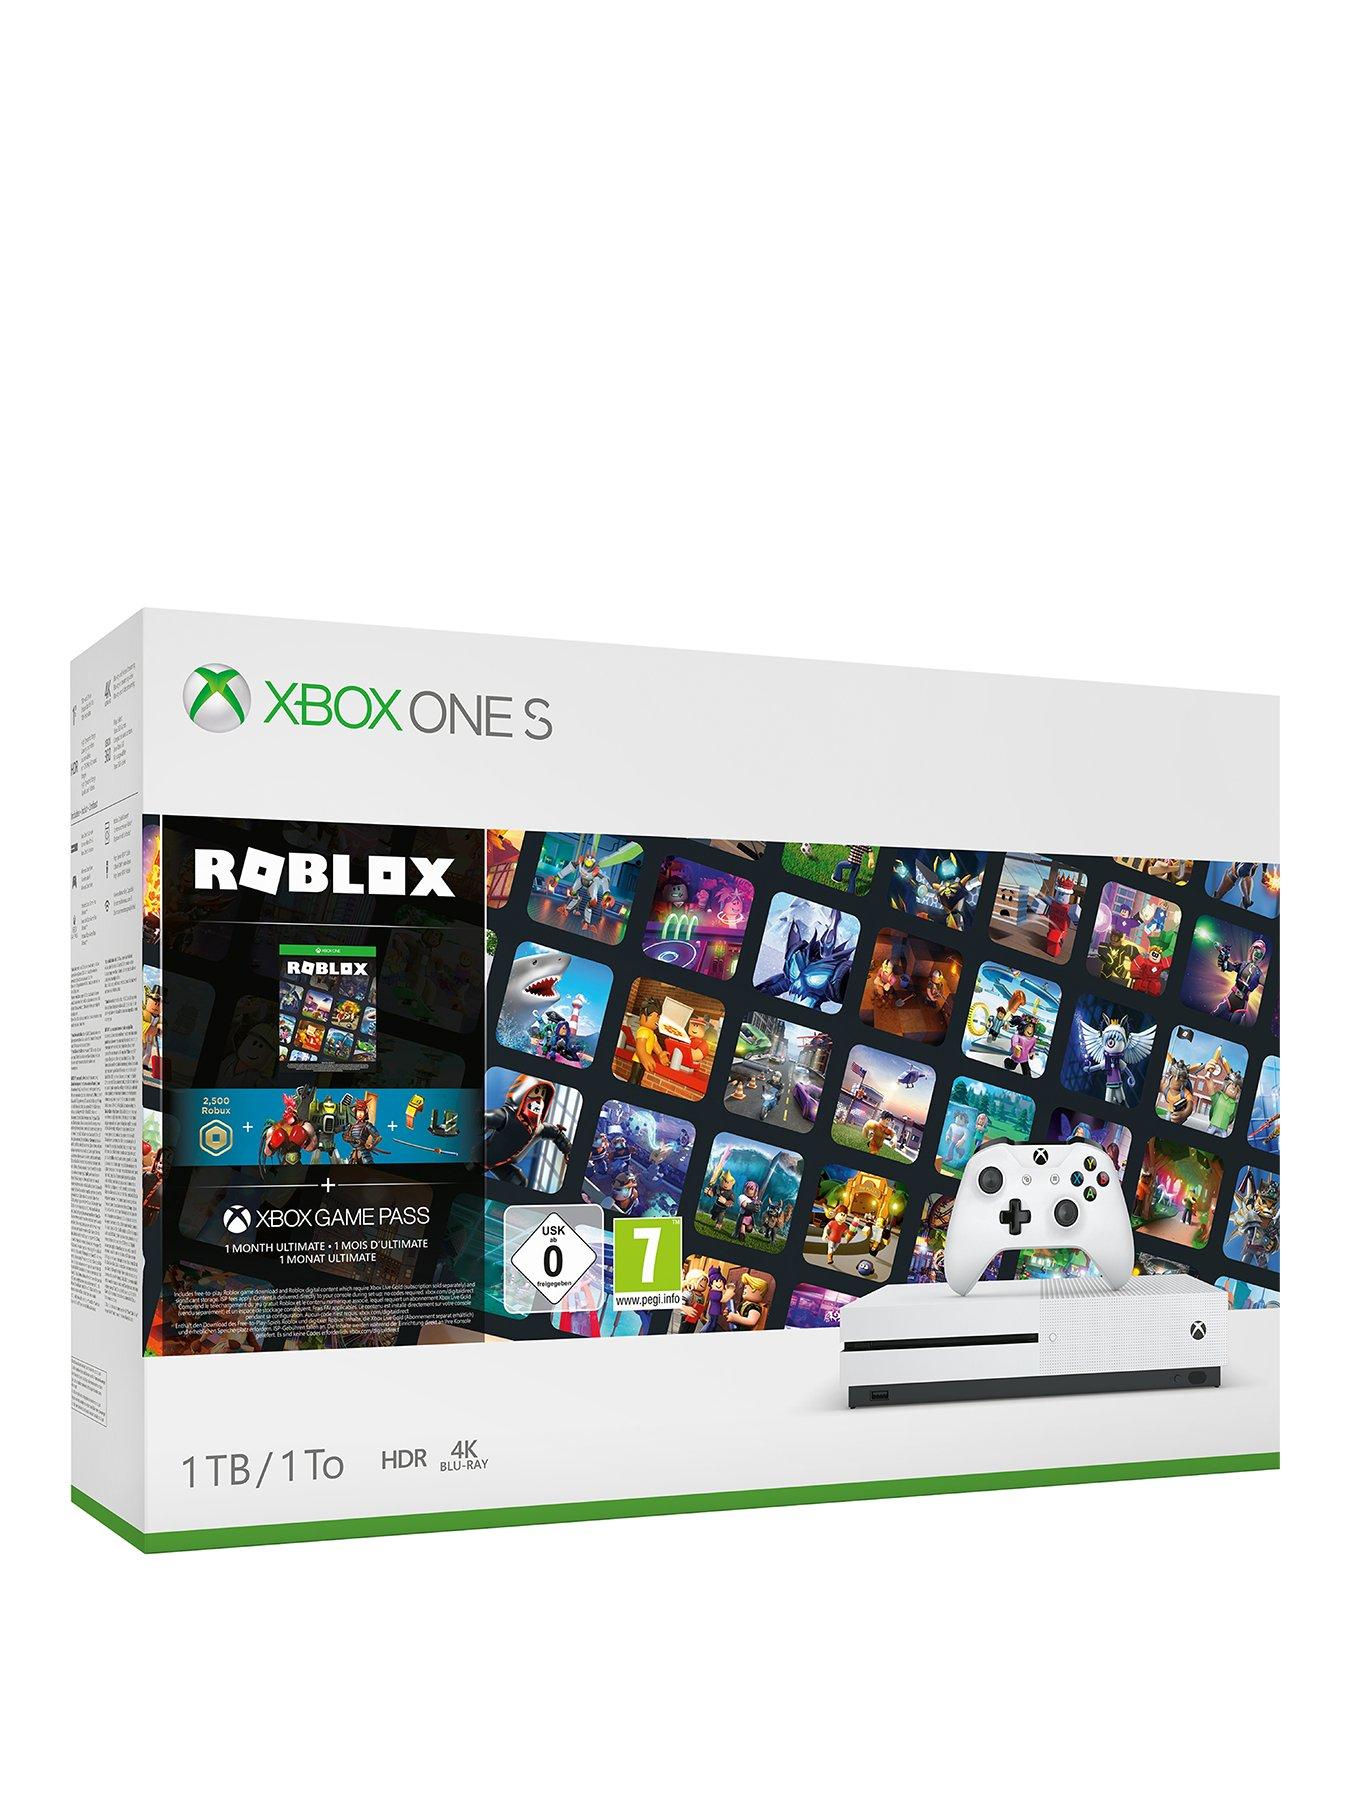 Xbox One S Roblox Bundle 1tb With Optional Extras Littlewoods Com - xbox one s roblox bundle 1tb xbox